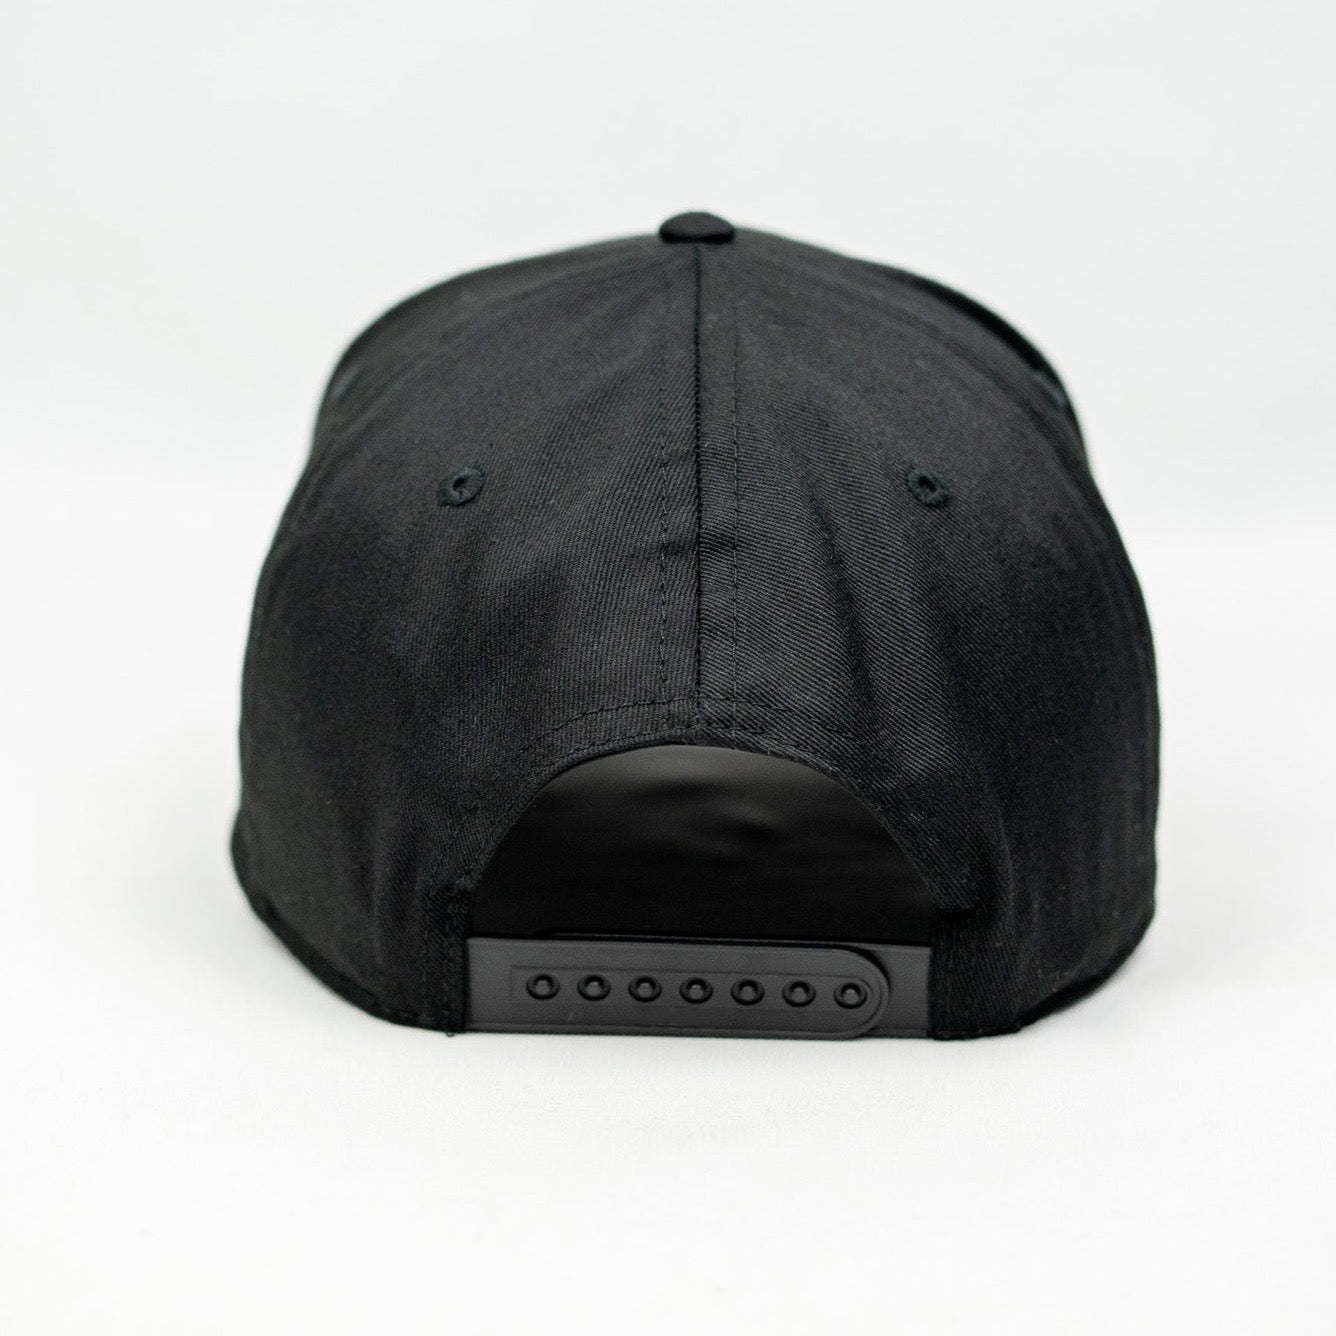 "J" Signature Snapback Hat (BLACK)